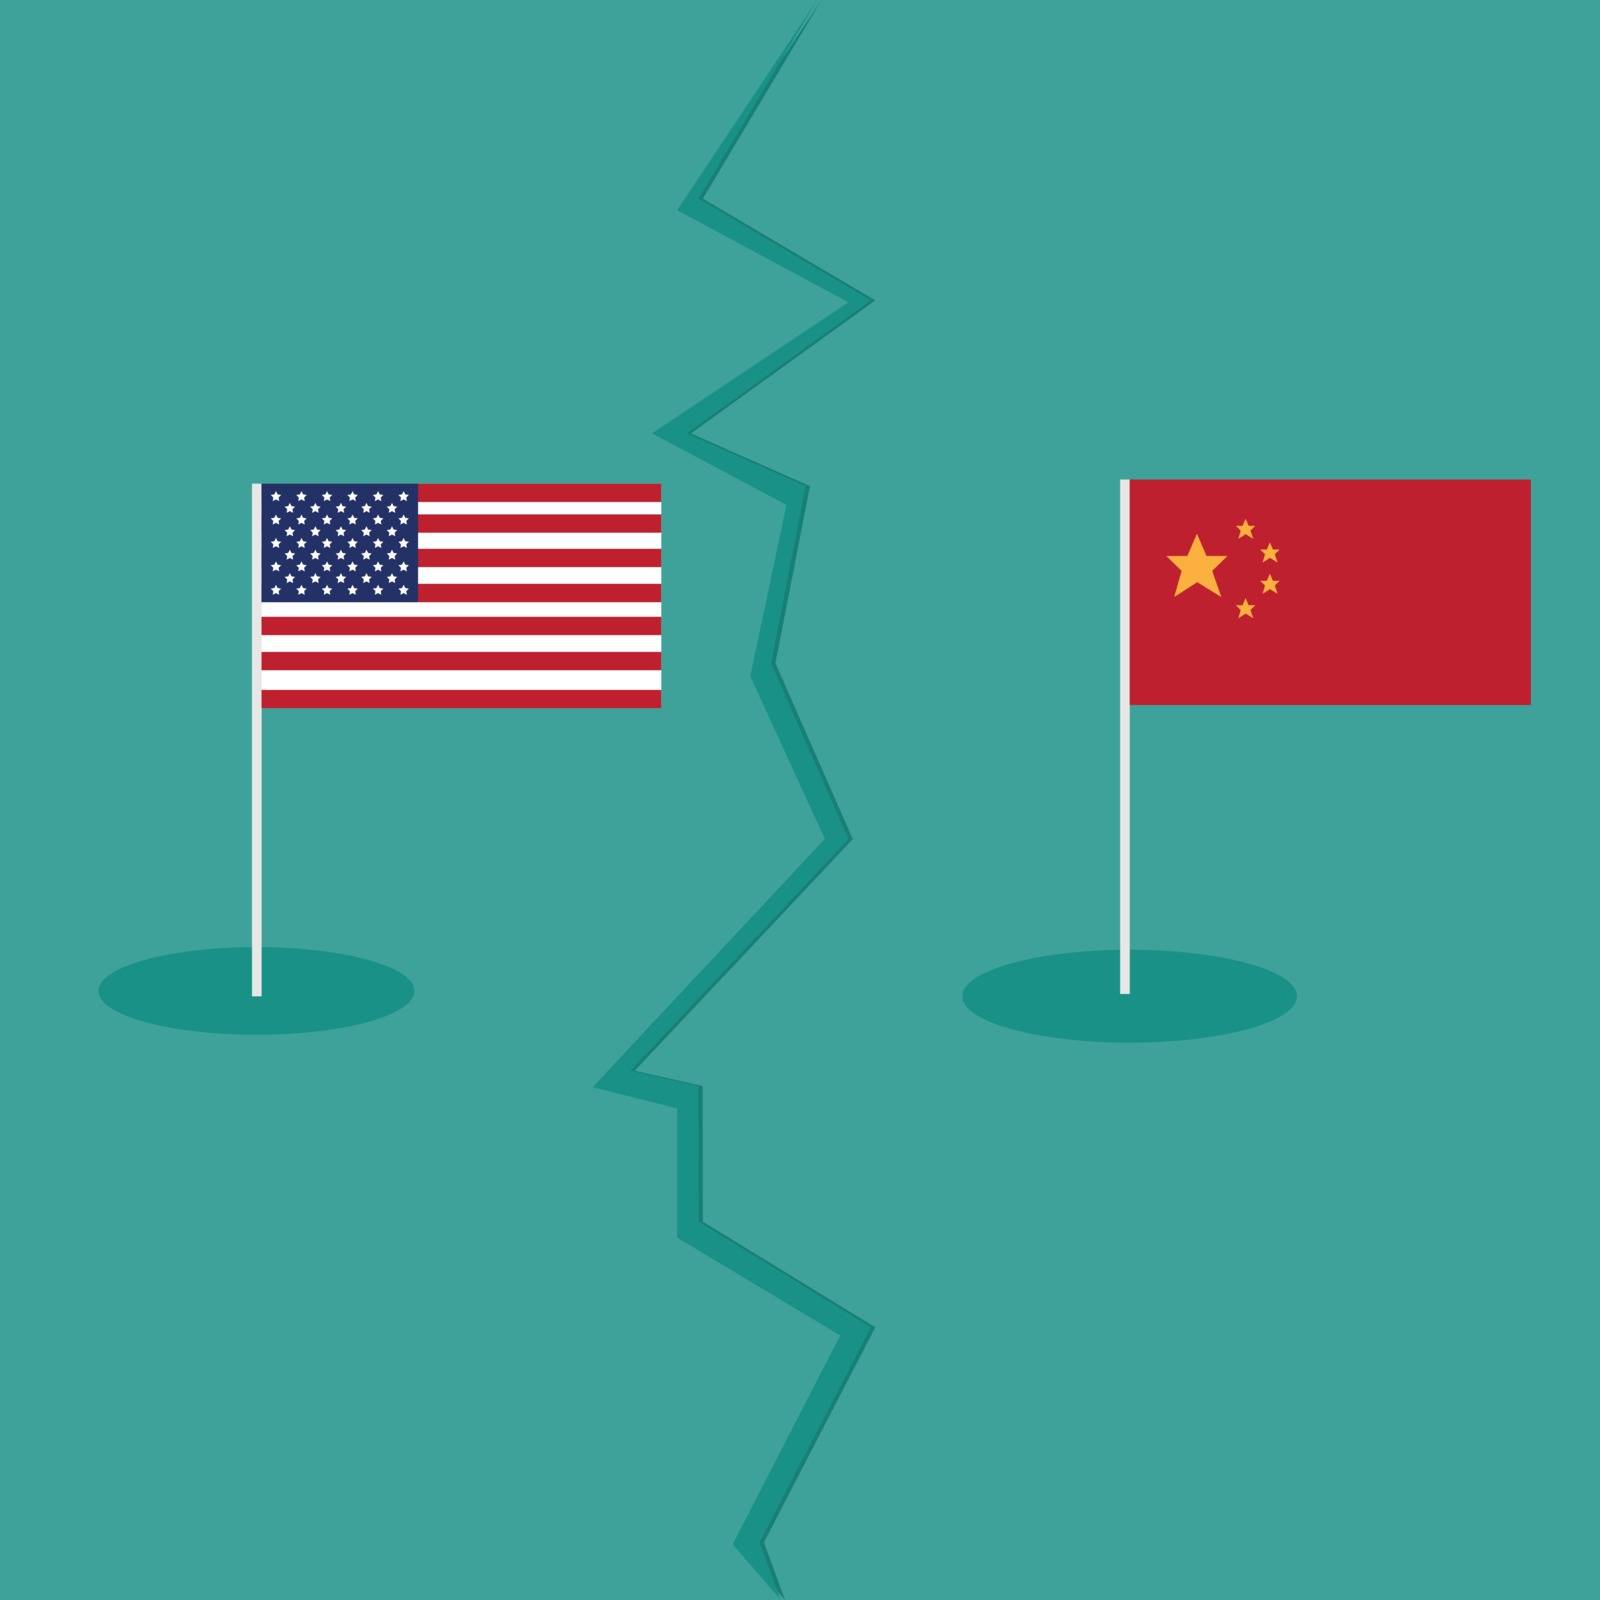 trade war America China tariff business global exchange international by natali_brill